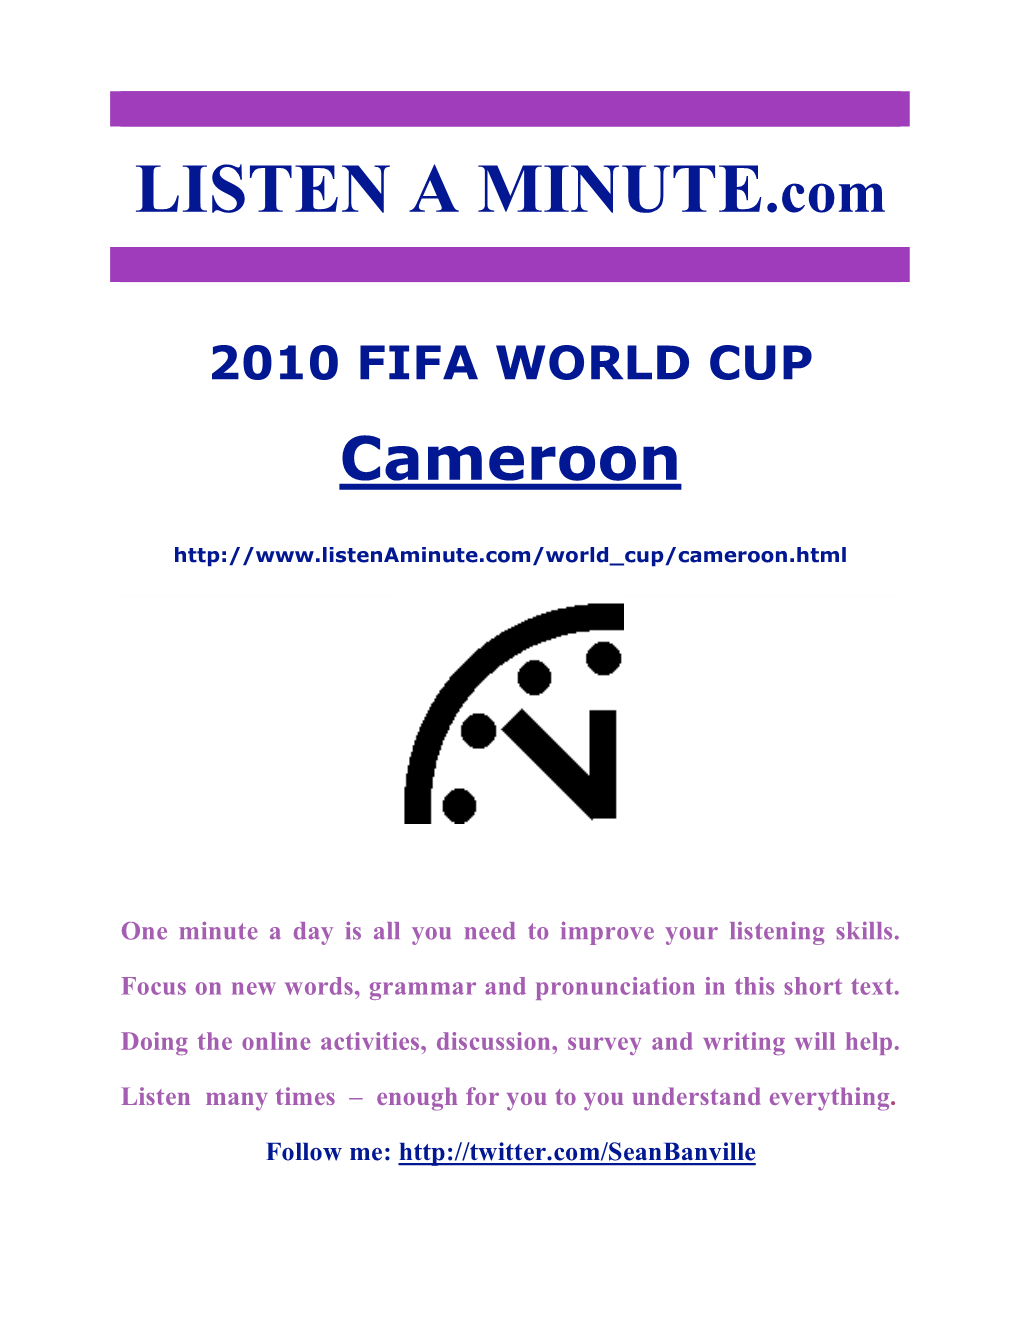 LISTEN a MINUTE.Com 2010 FIFA WORLD CUP Cameroon